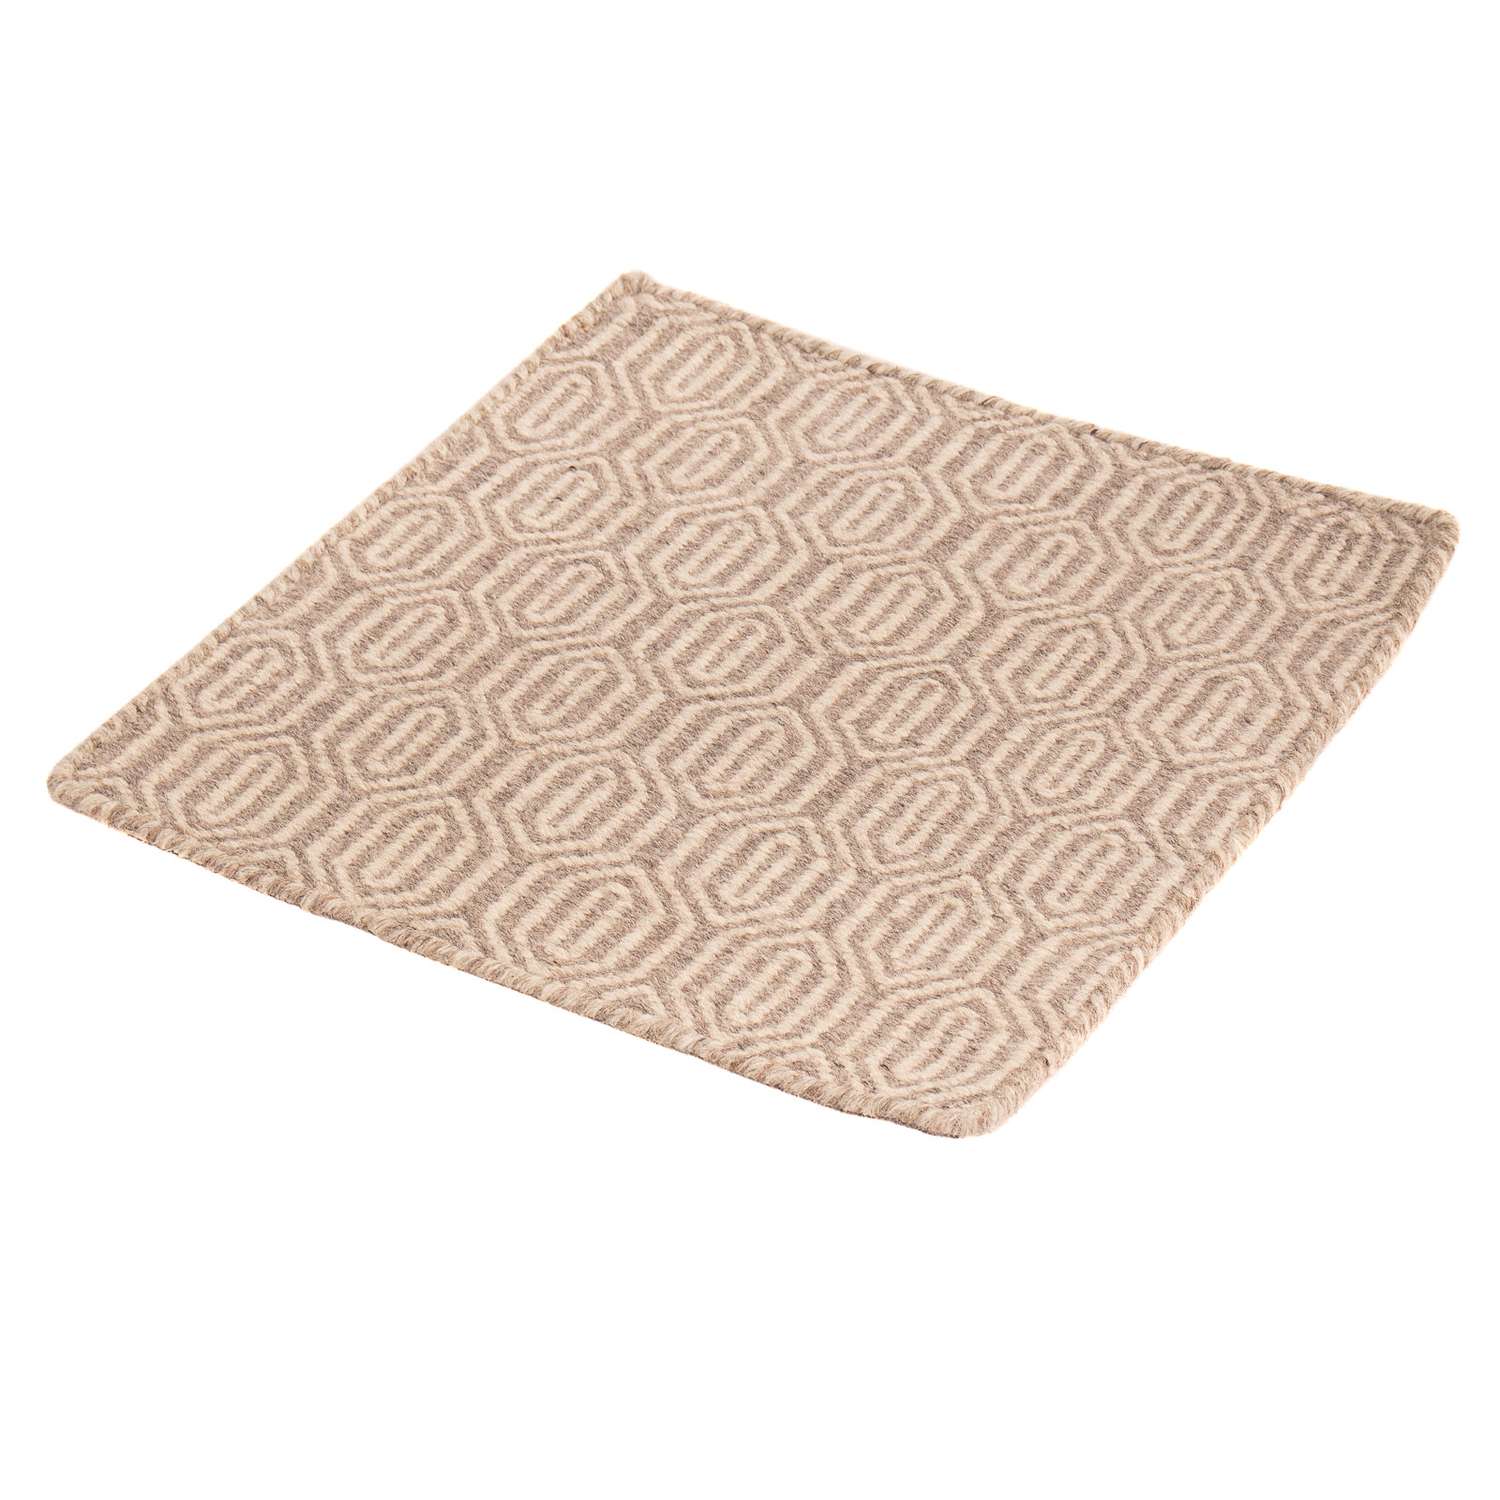 Kelim Rug - Trendy square  - 46 x 45 cm - light brown